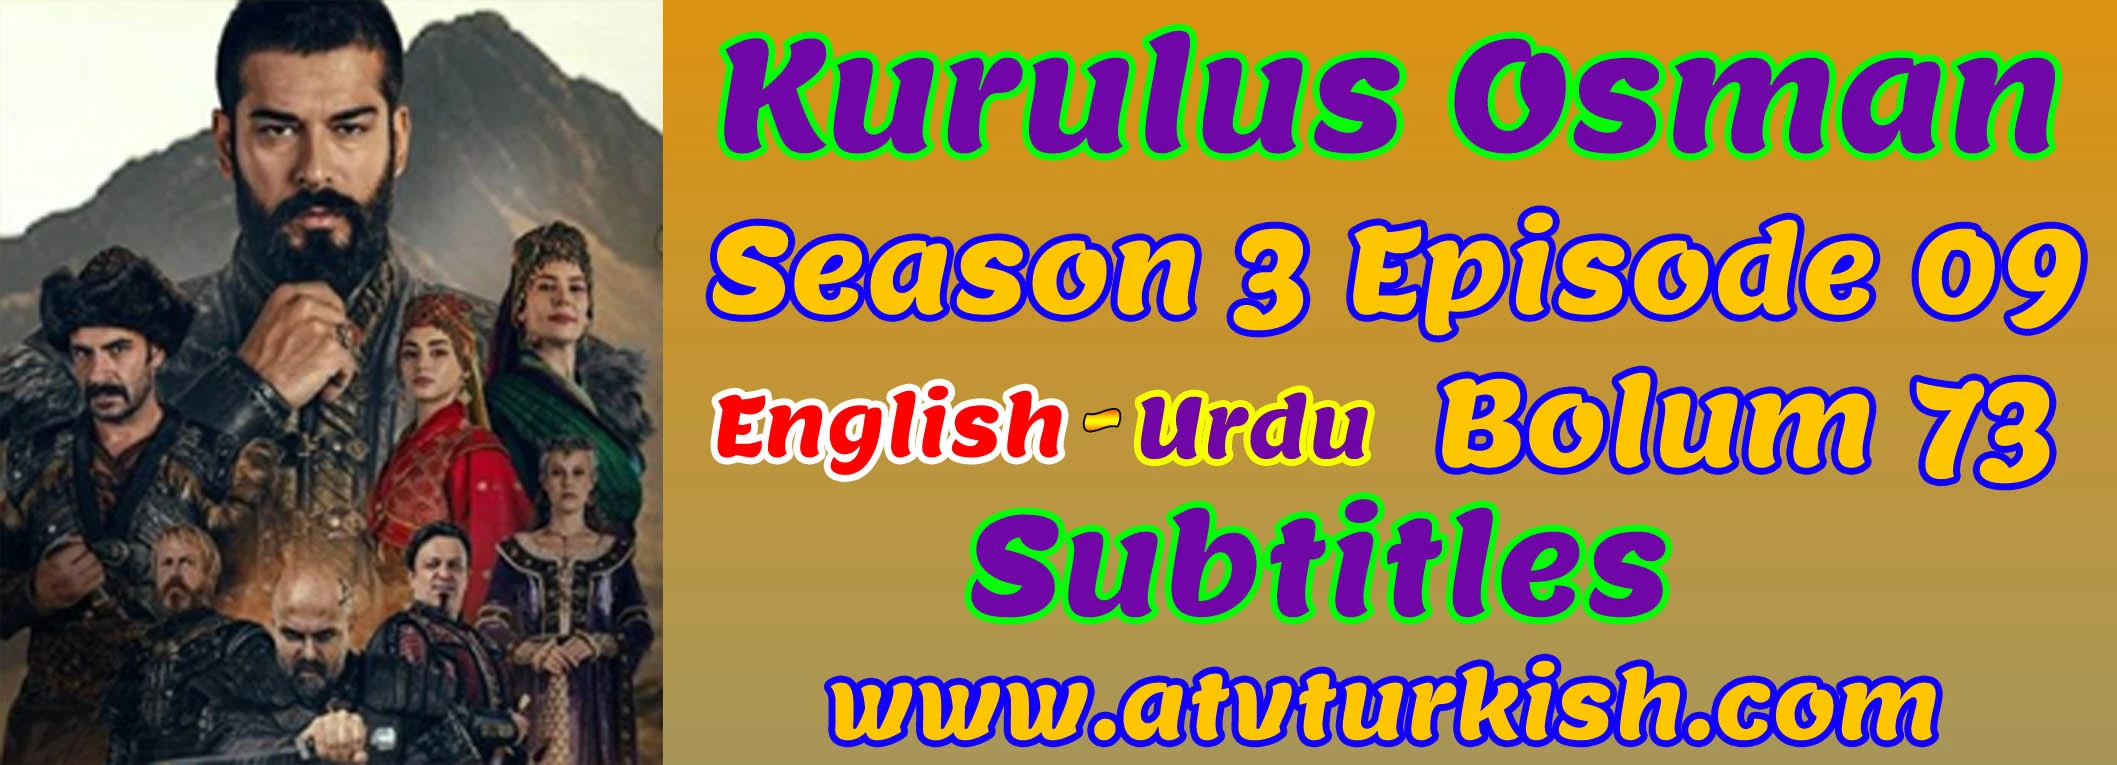 Kurulus Osman Season 3 Episode 9 English and Urdu Subtitles Bolum 73